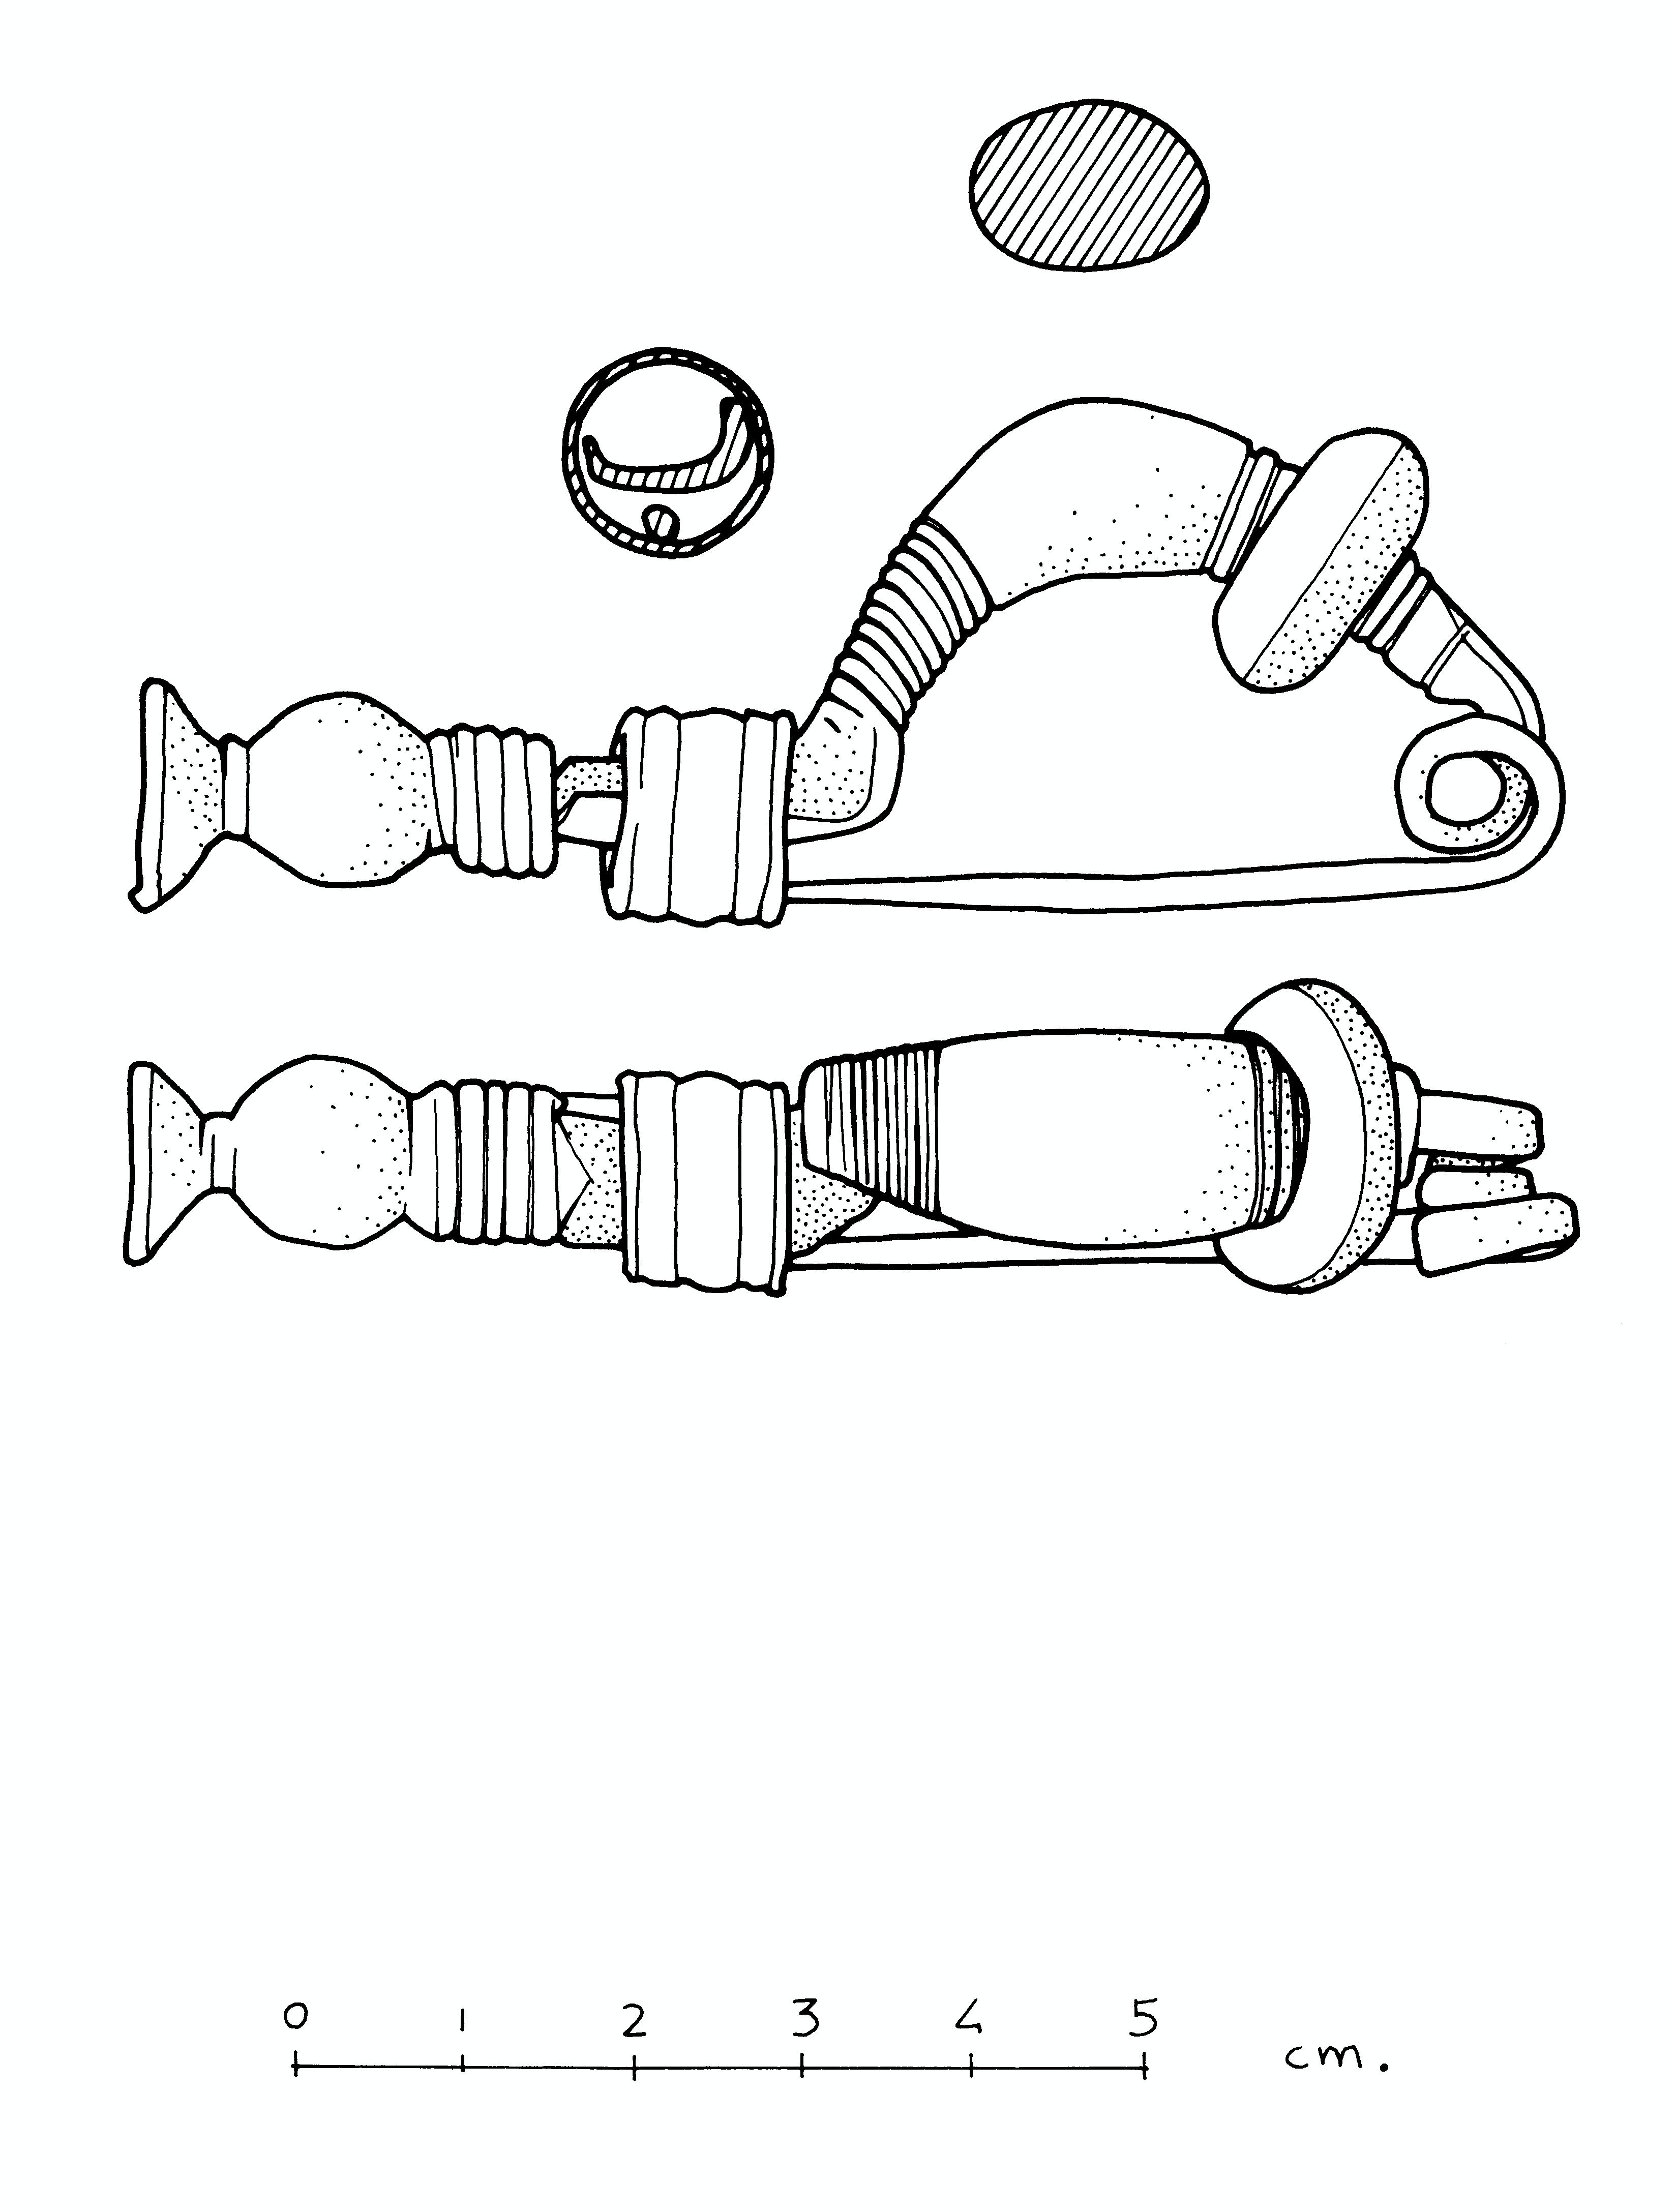 fibula, ad arco ingrossato (fine/primo quarto IV-III a.C)